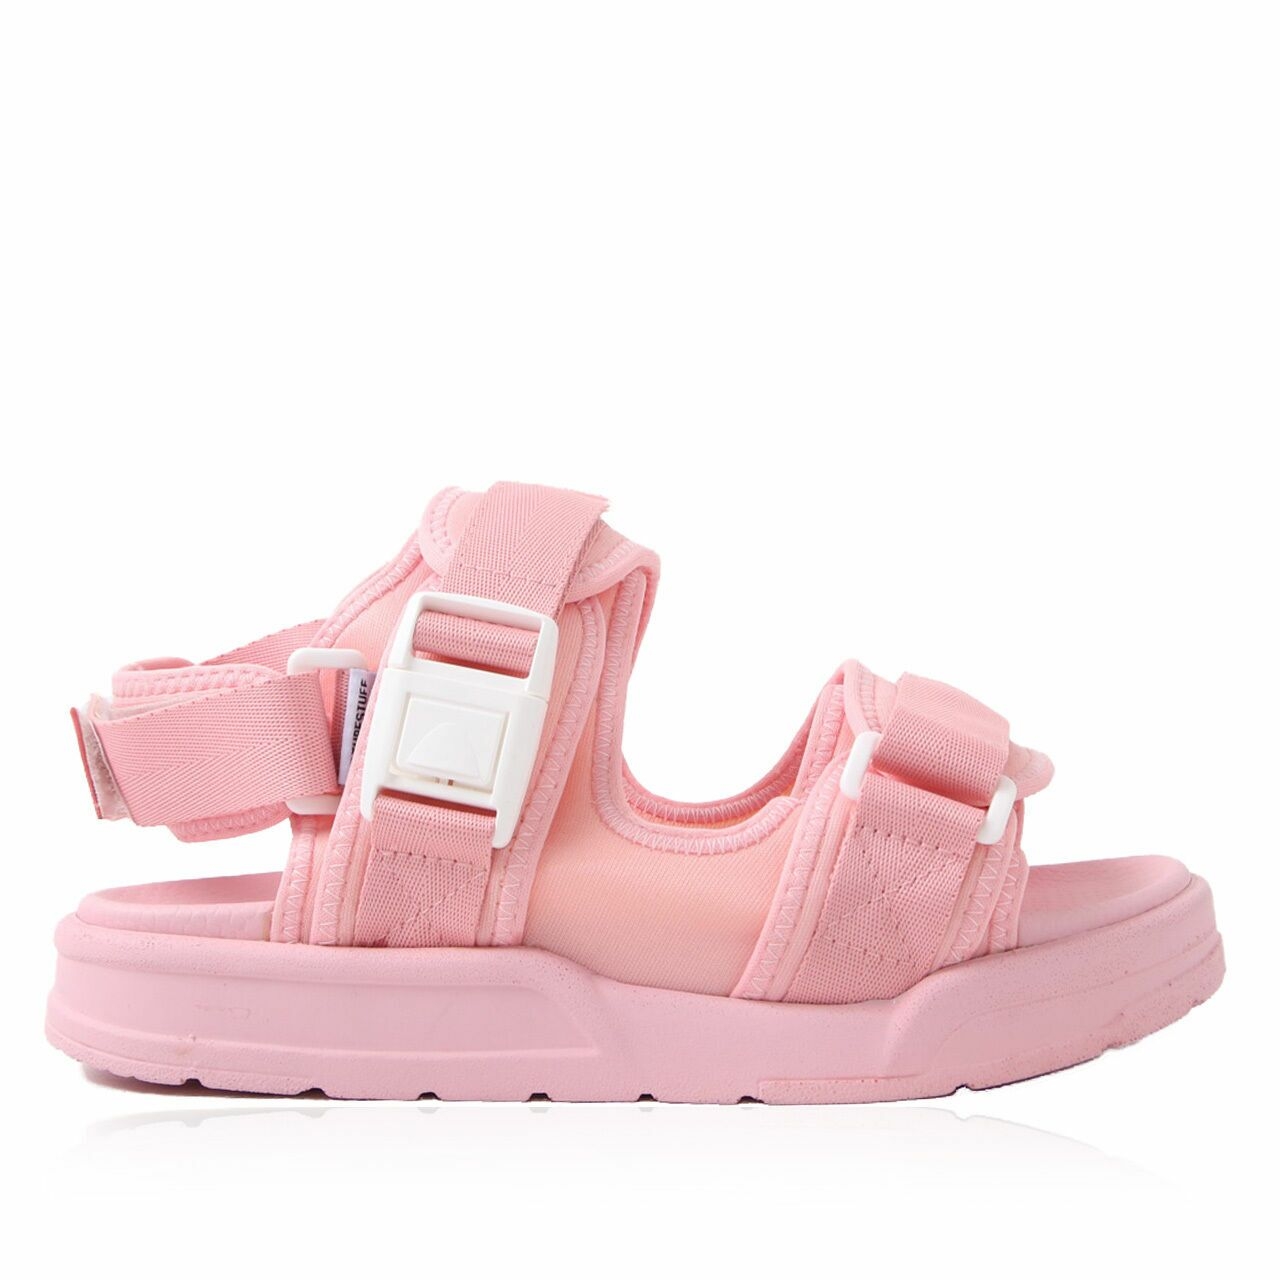 Culture Stuff Pink Sandals